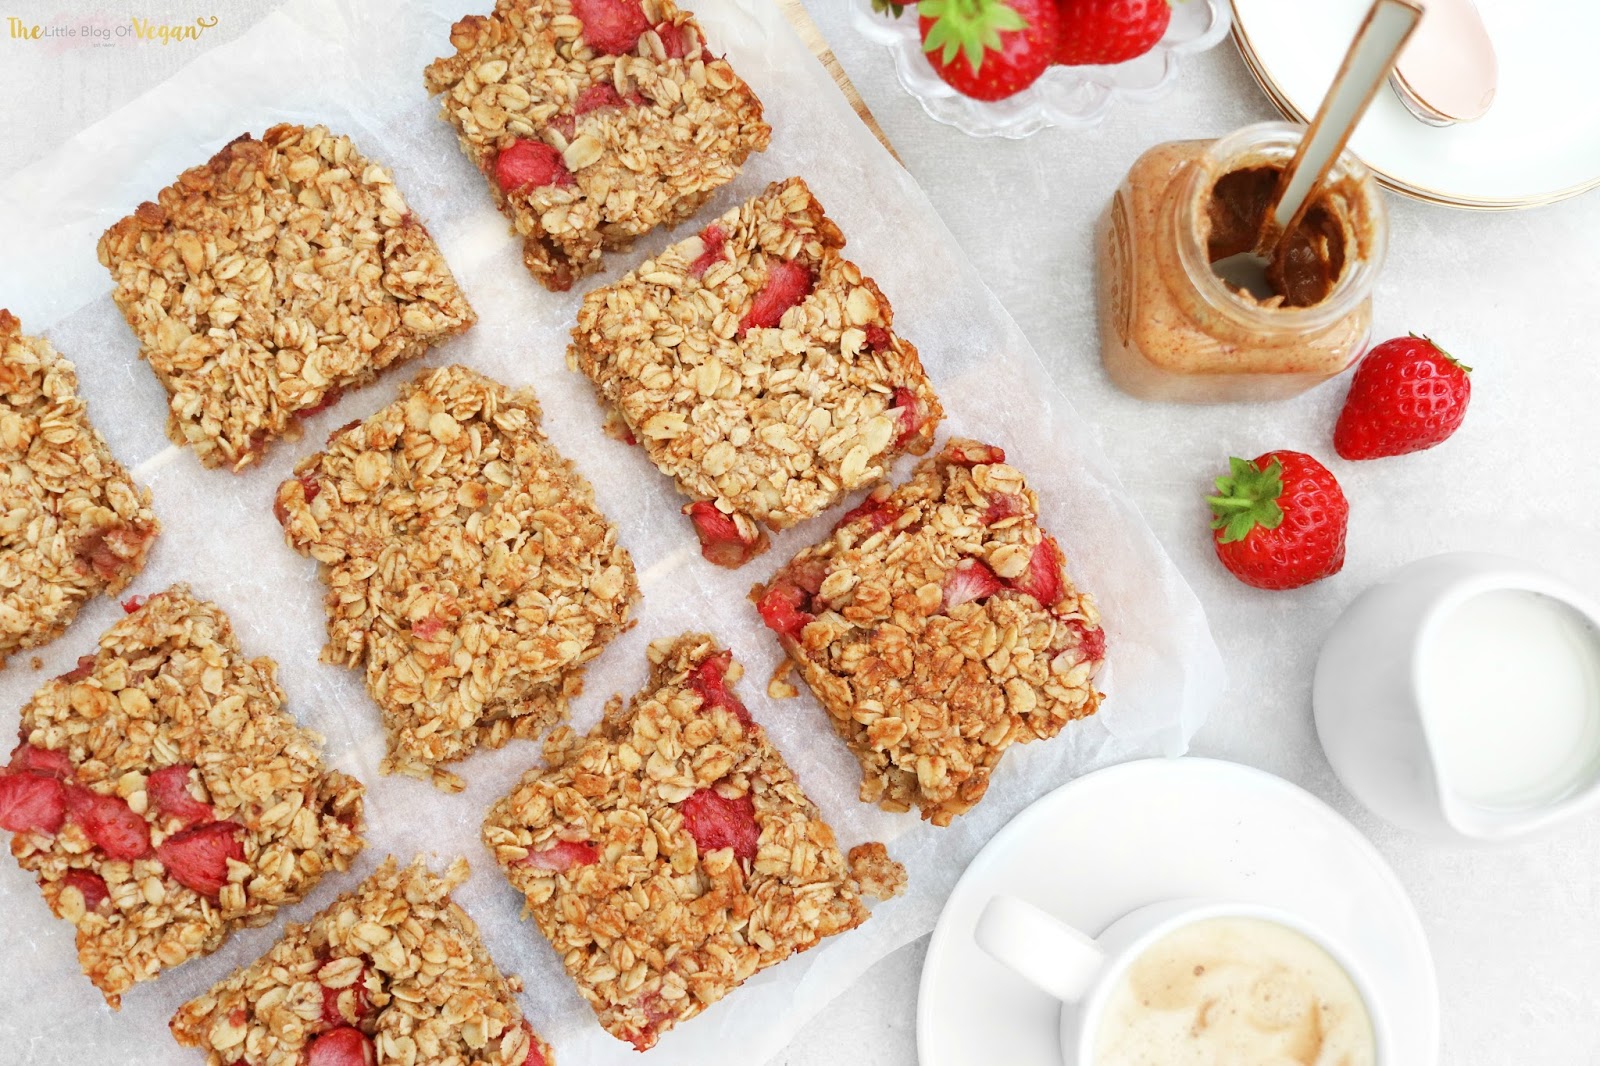 Strawberry oat breakfast bar recipe | The Little Blog Of Vegan